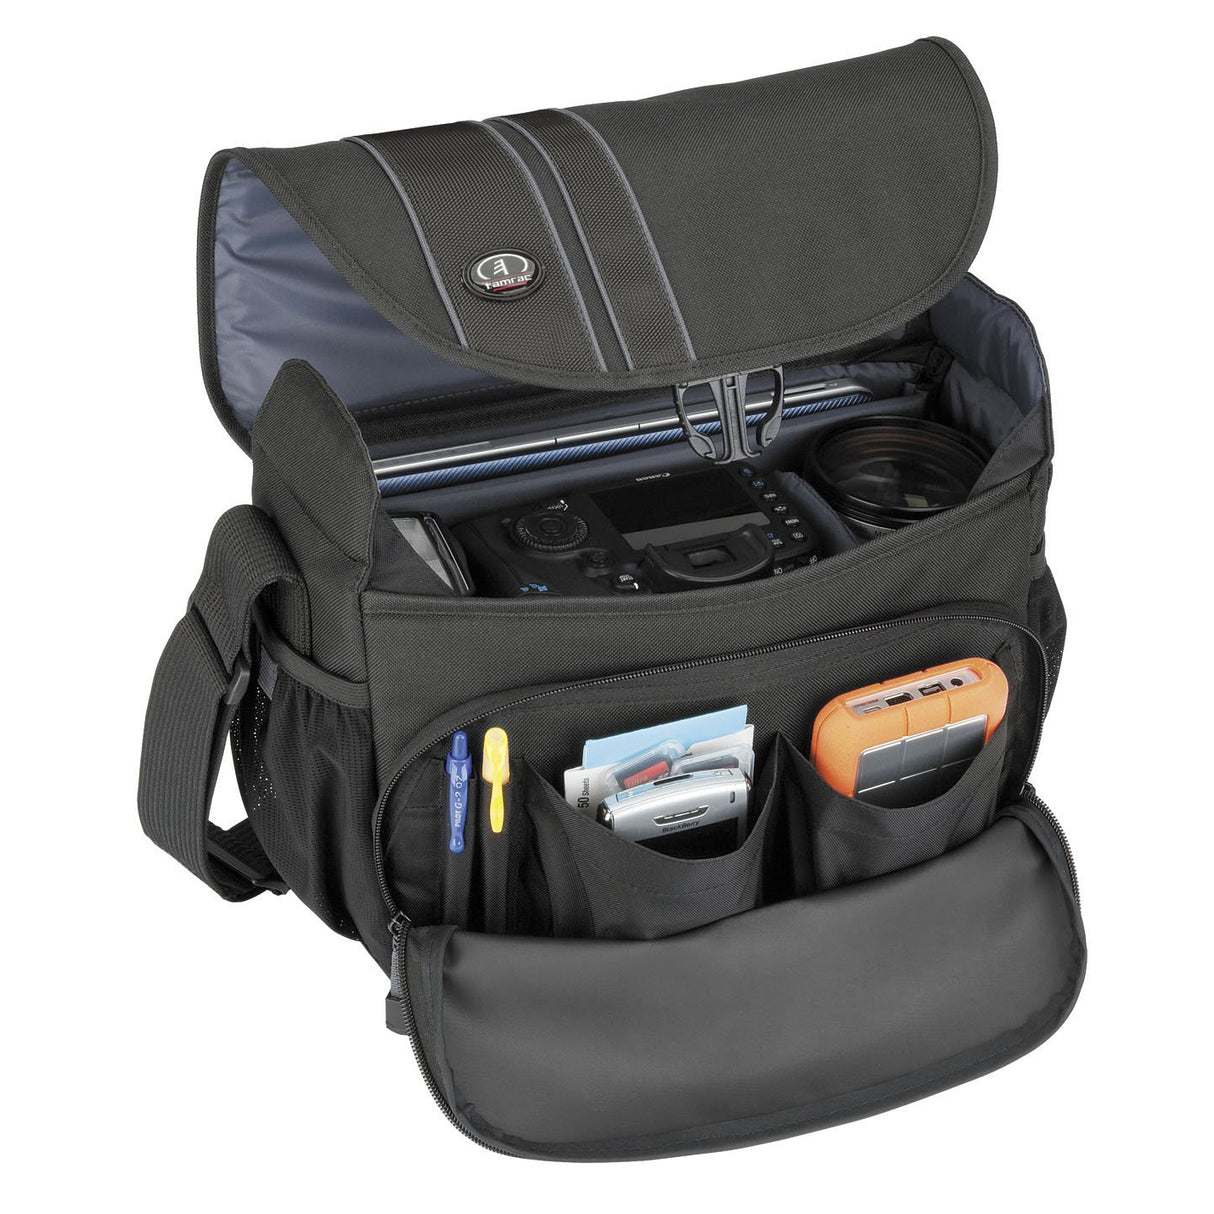 Tamrac 3445 Rally 5 Camera/Netbook/iPad Bag (Black)